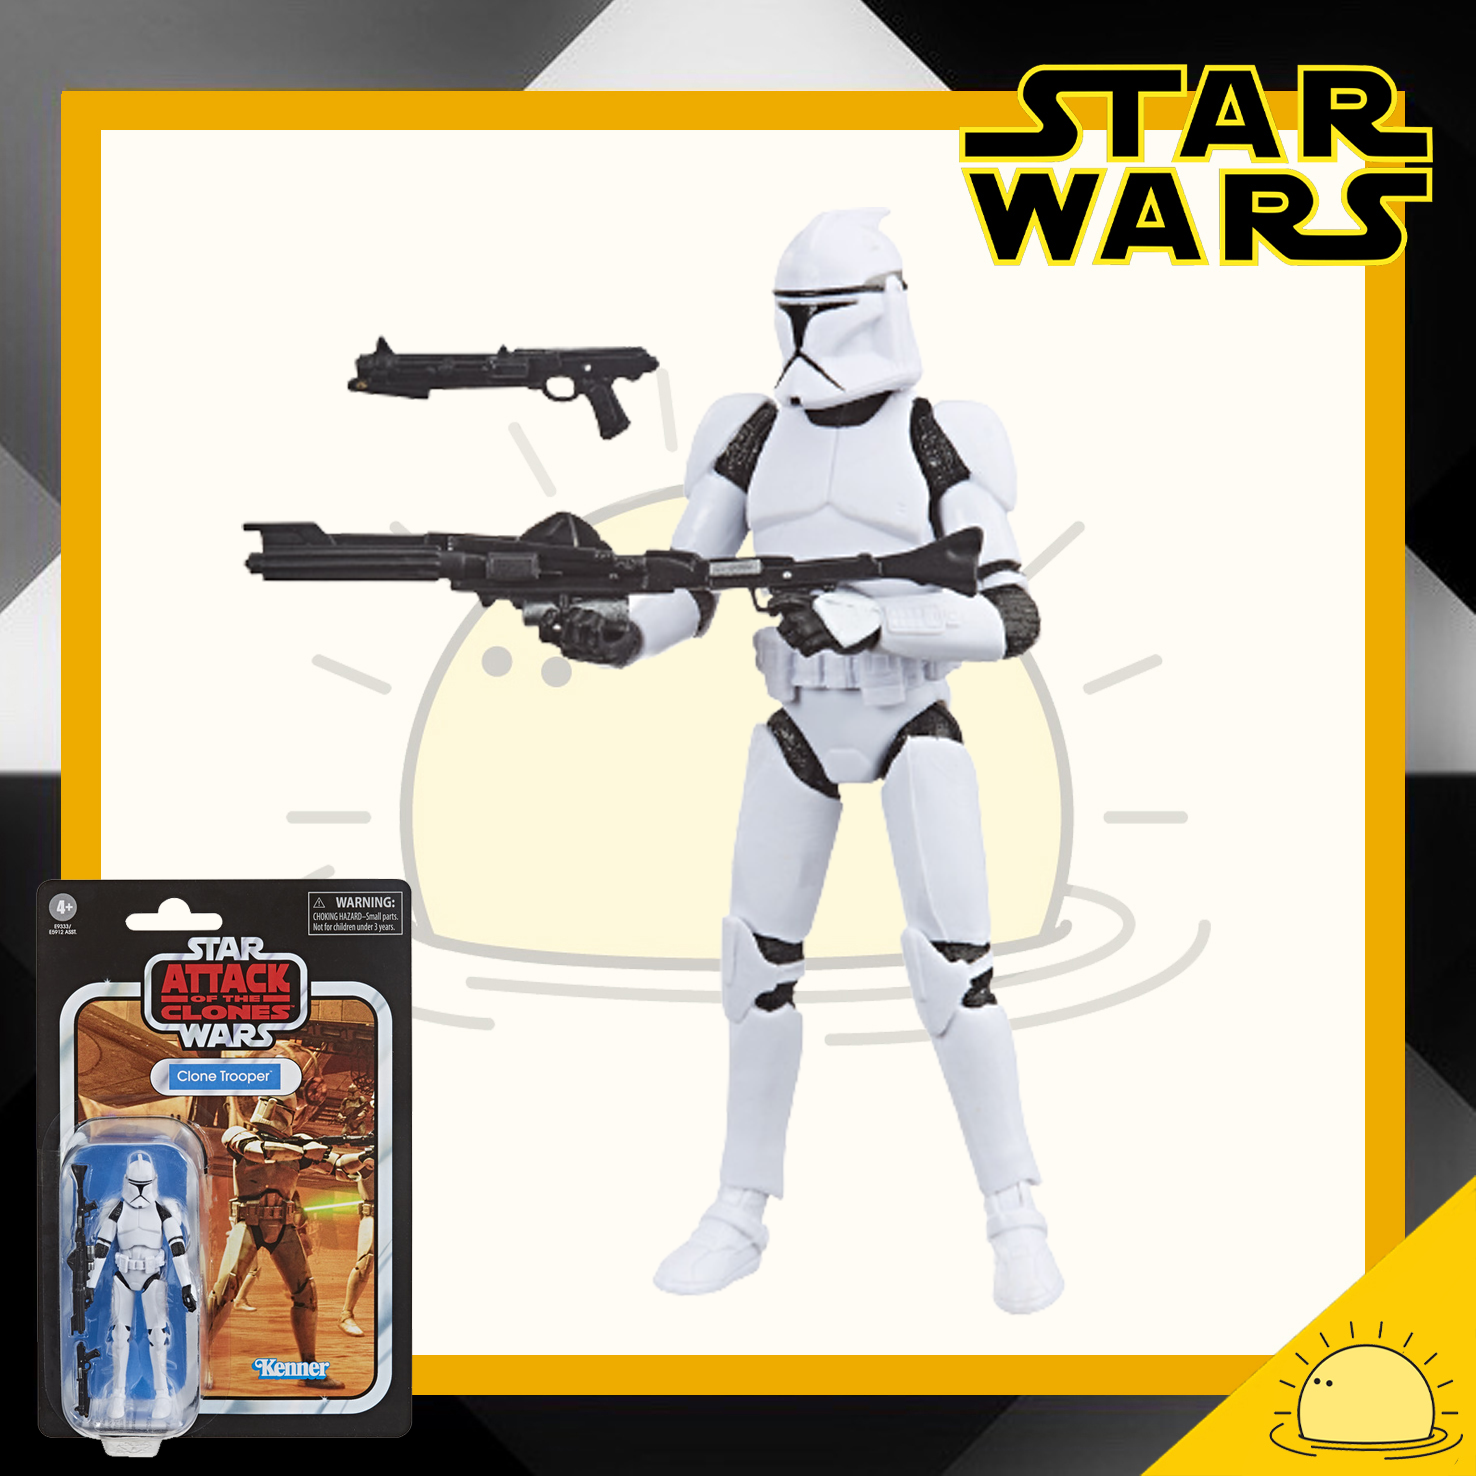 Clone Trooper : Star Wars Vintage Attack Of The Clones Kenner Hasbro Action Figure 3.75 นิ้ว ฟิกเกอร์ ของเล่นของสะสม